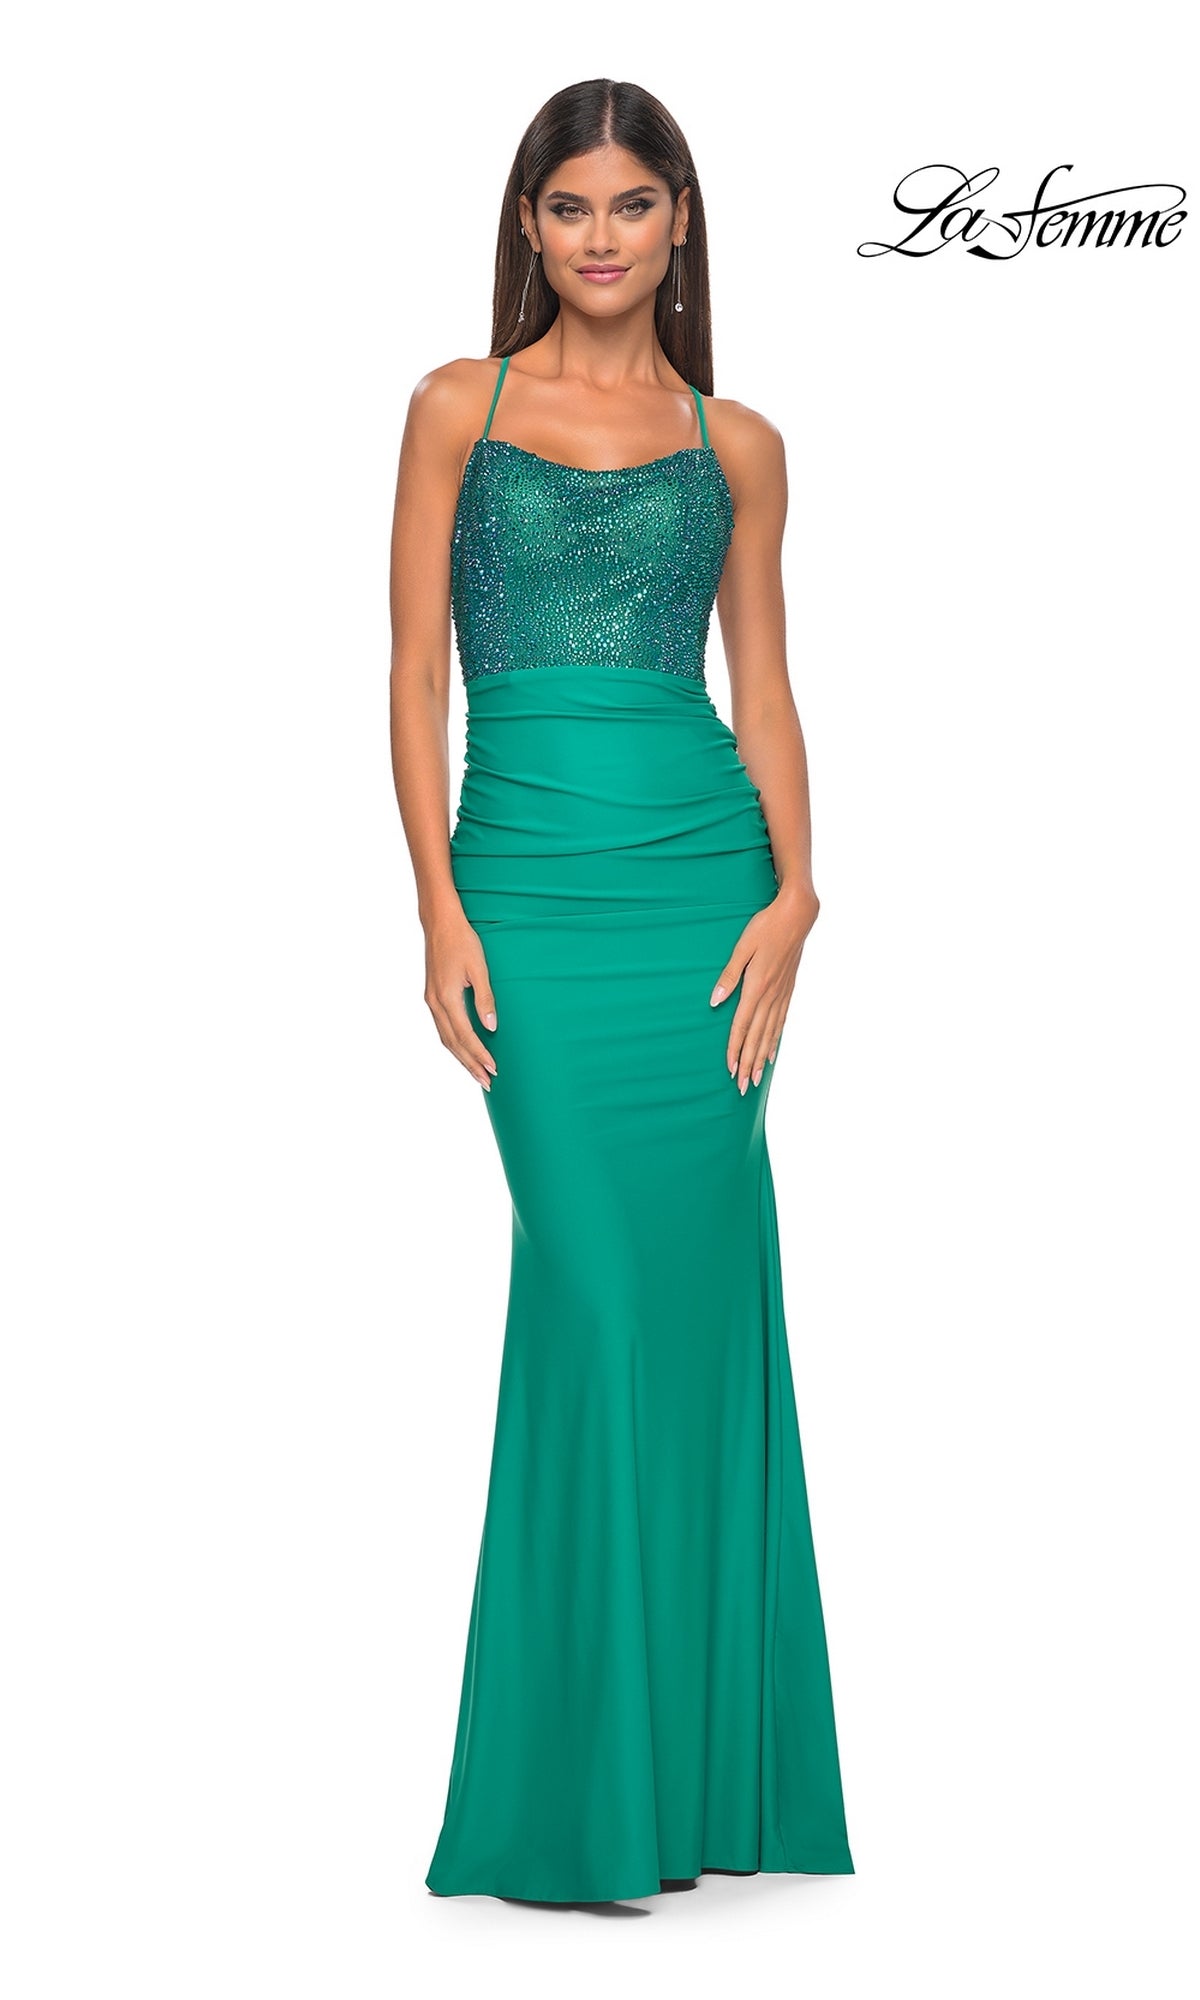 La Femme Beaded-Bodice Tight Long Prom Dress 31989